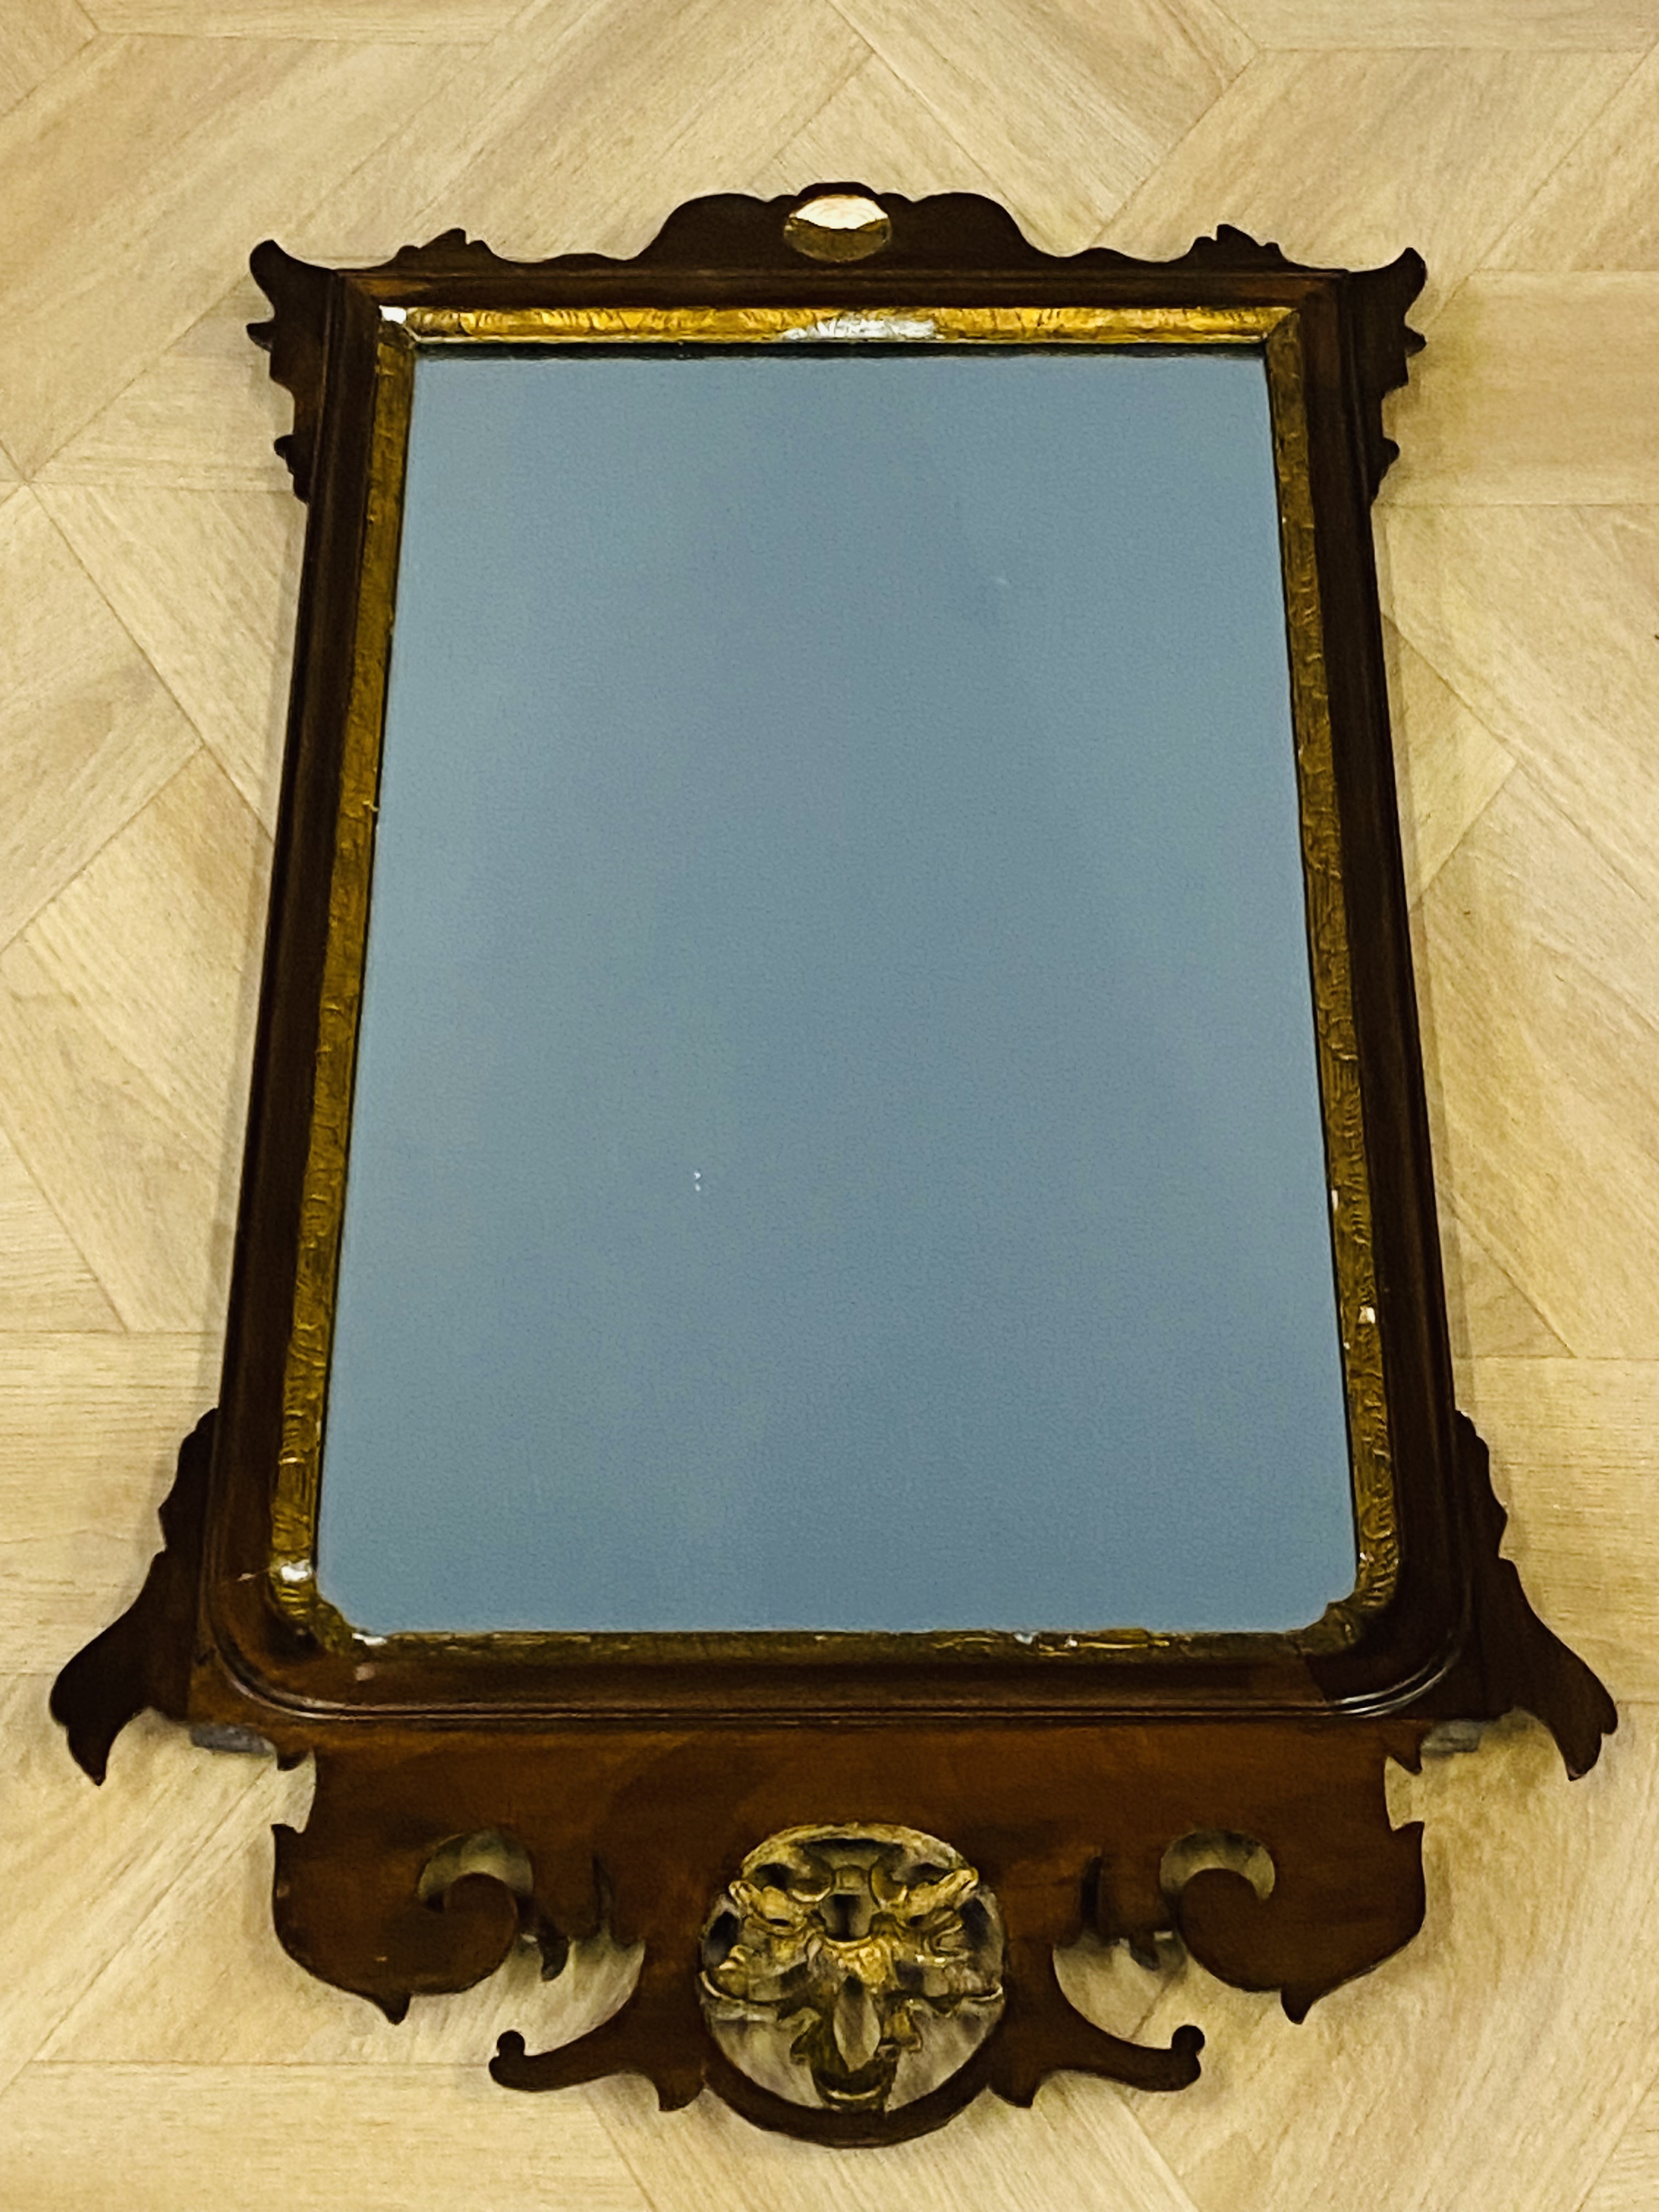 19th century Georgian style mahogany pier mirror - Image 2 of 5